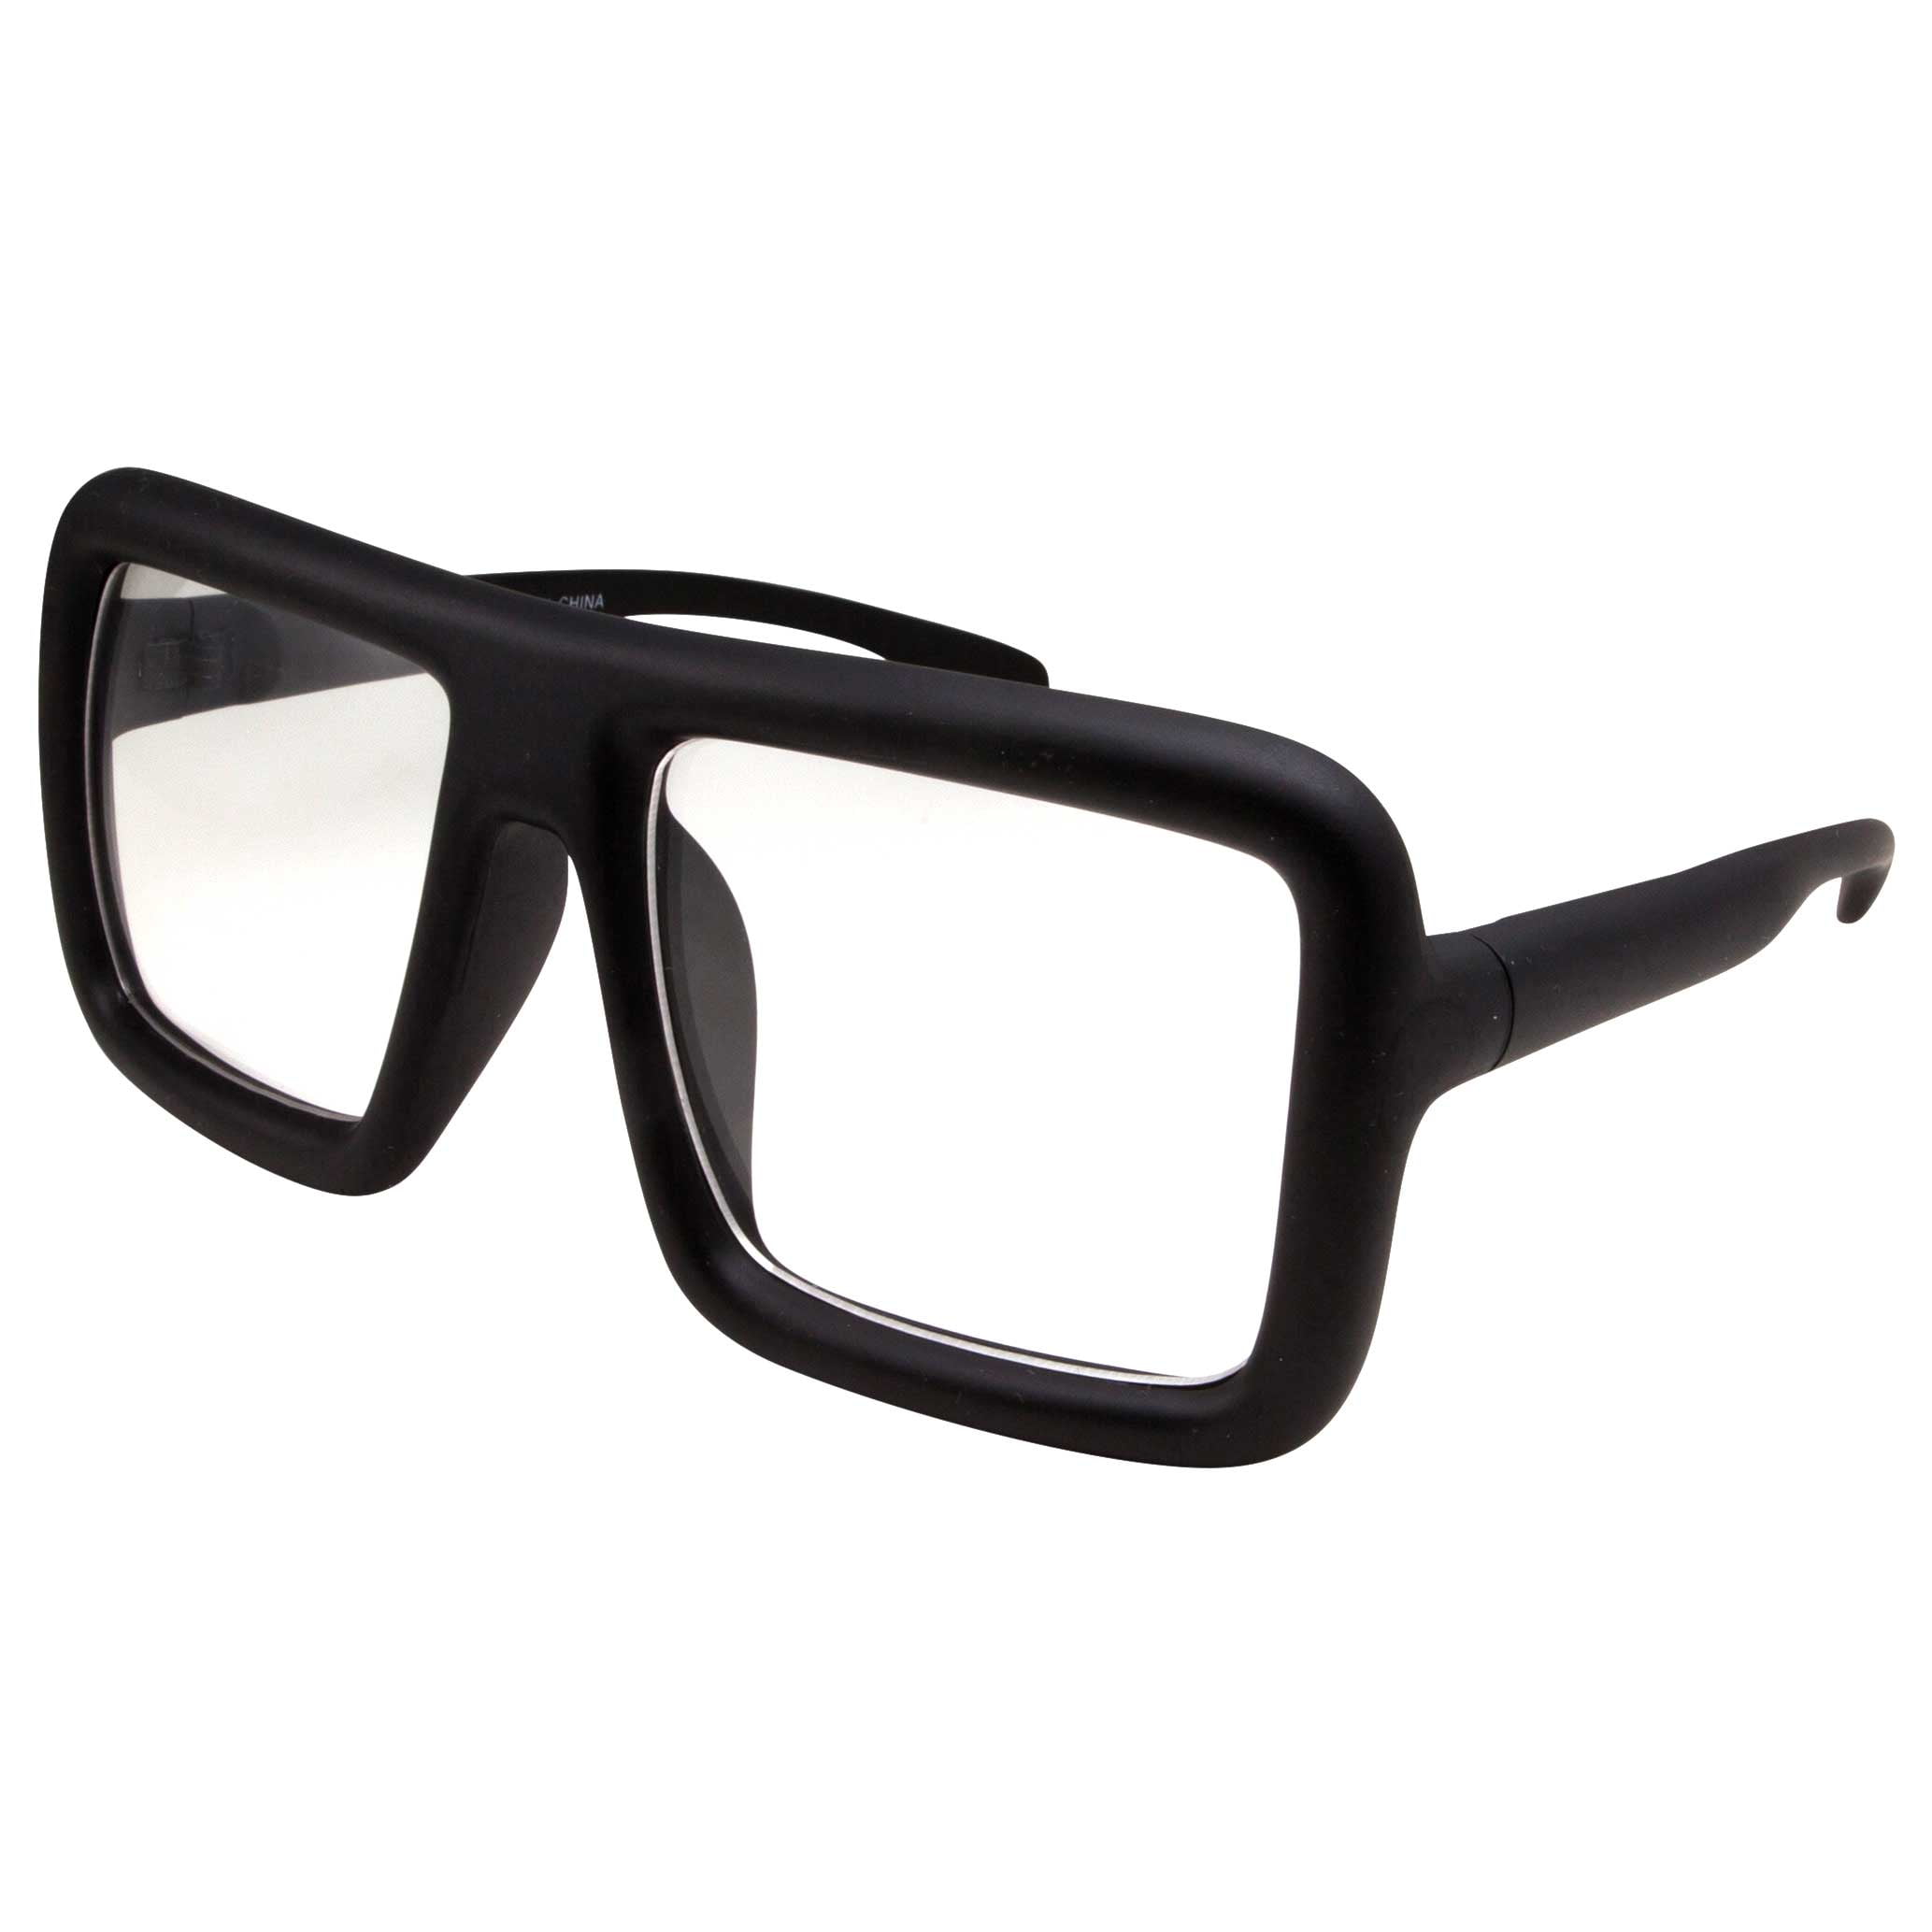 Retro Nerd Fashion Unisex Eyewear NO LENS Fake Eye Glasses Black Frame Unisex 